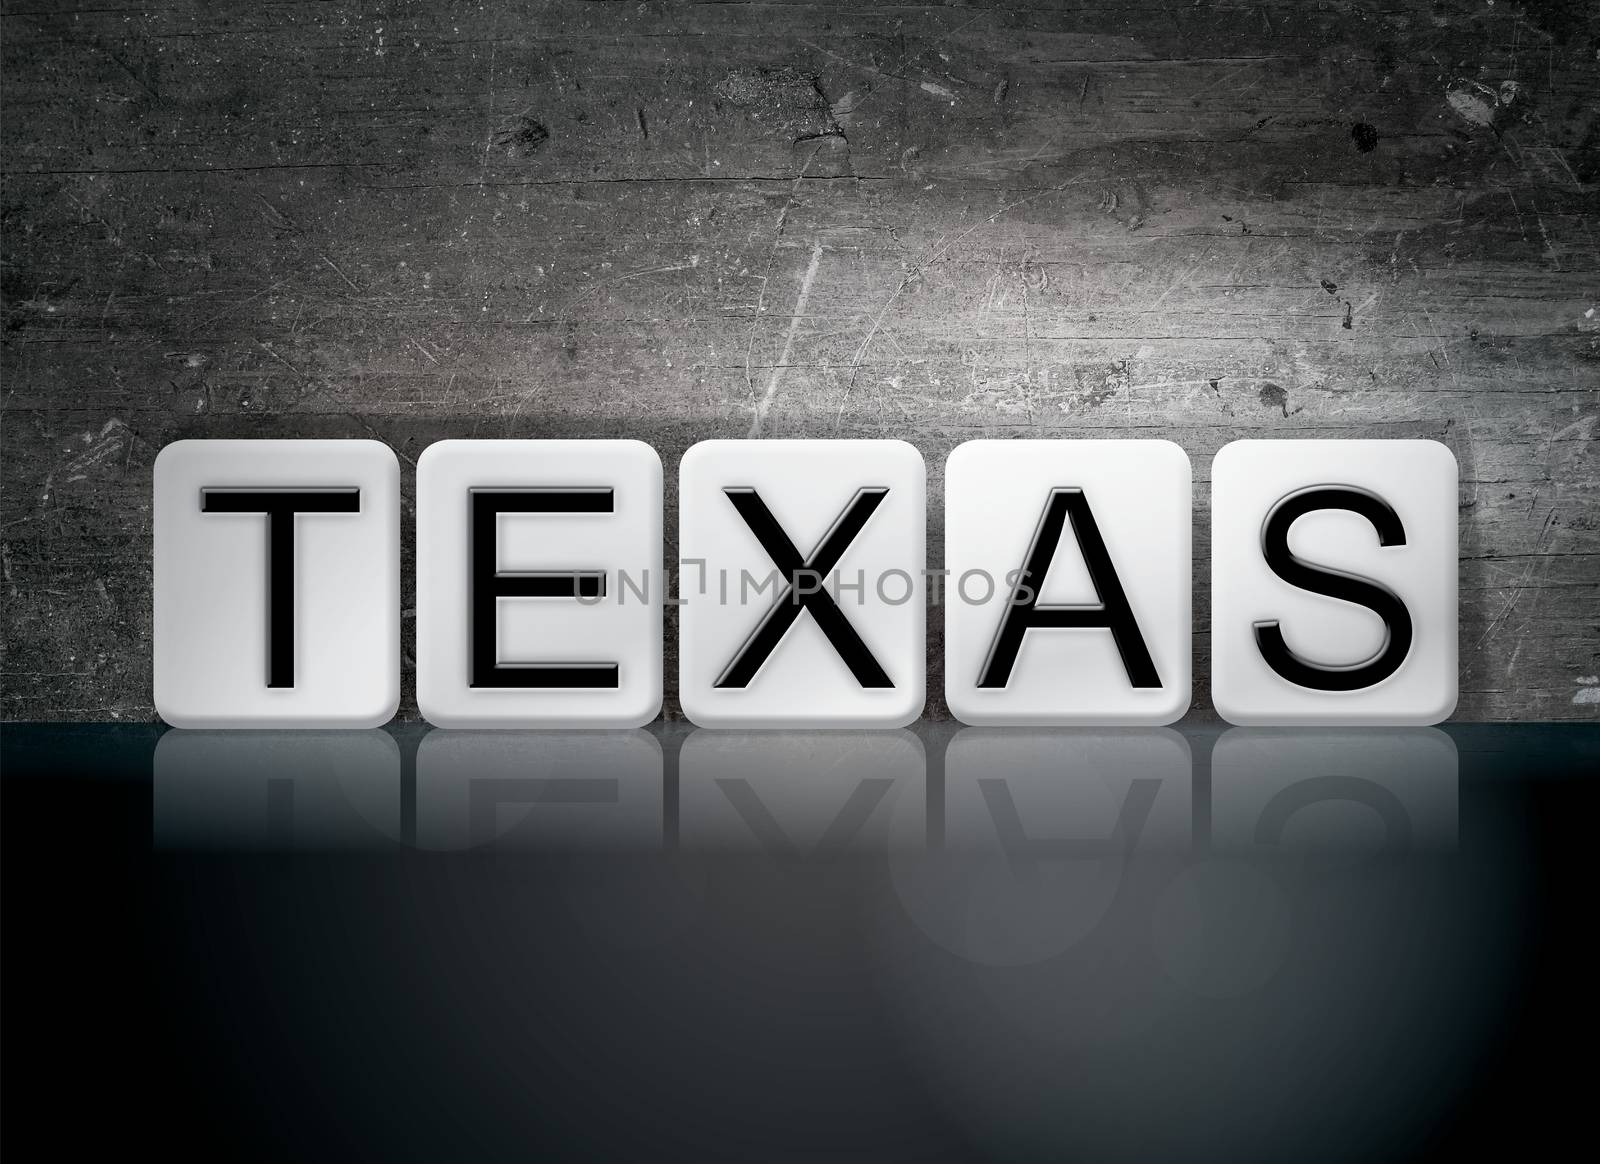 The word "Texas" written in white tiles against a dark vintage grunge background.